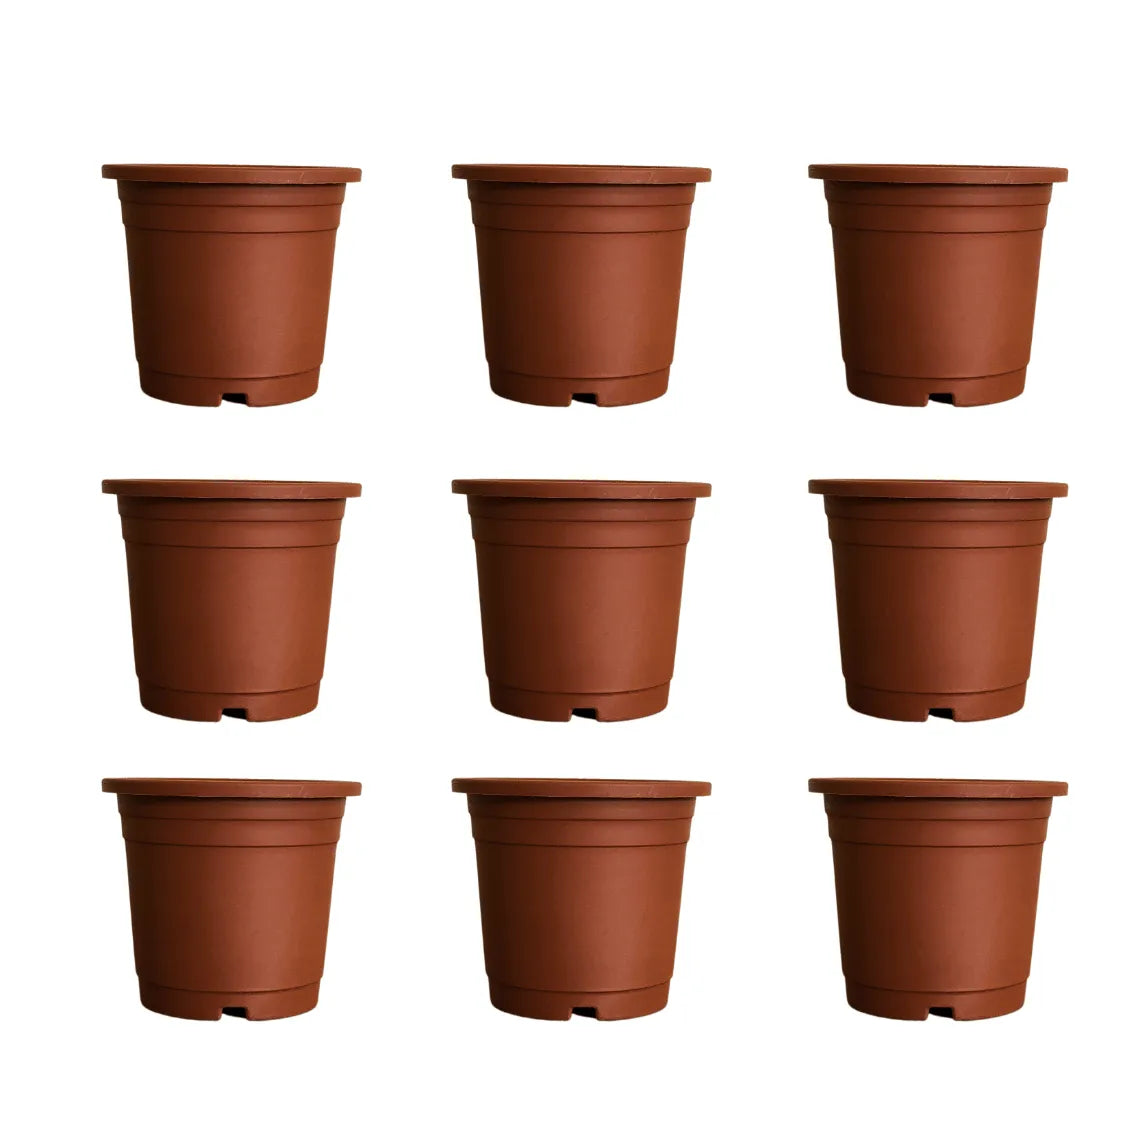 Buy Gardening Pots - Terracotta Color Online at Lalitenterprise